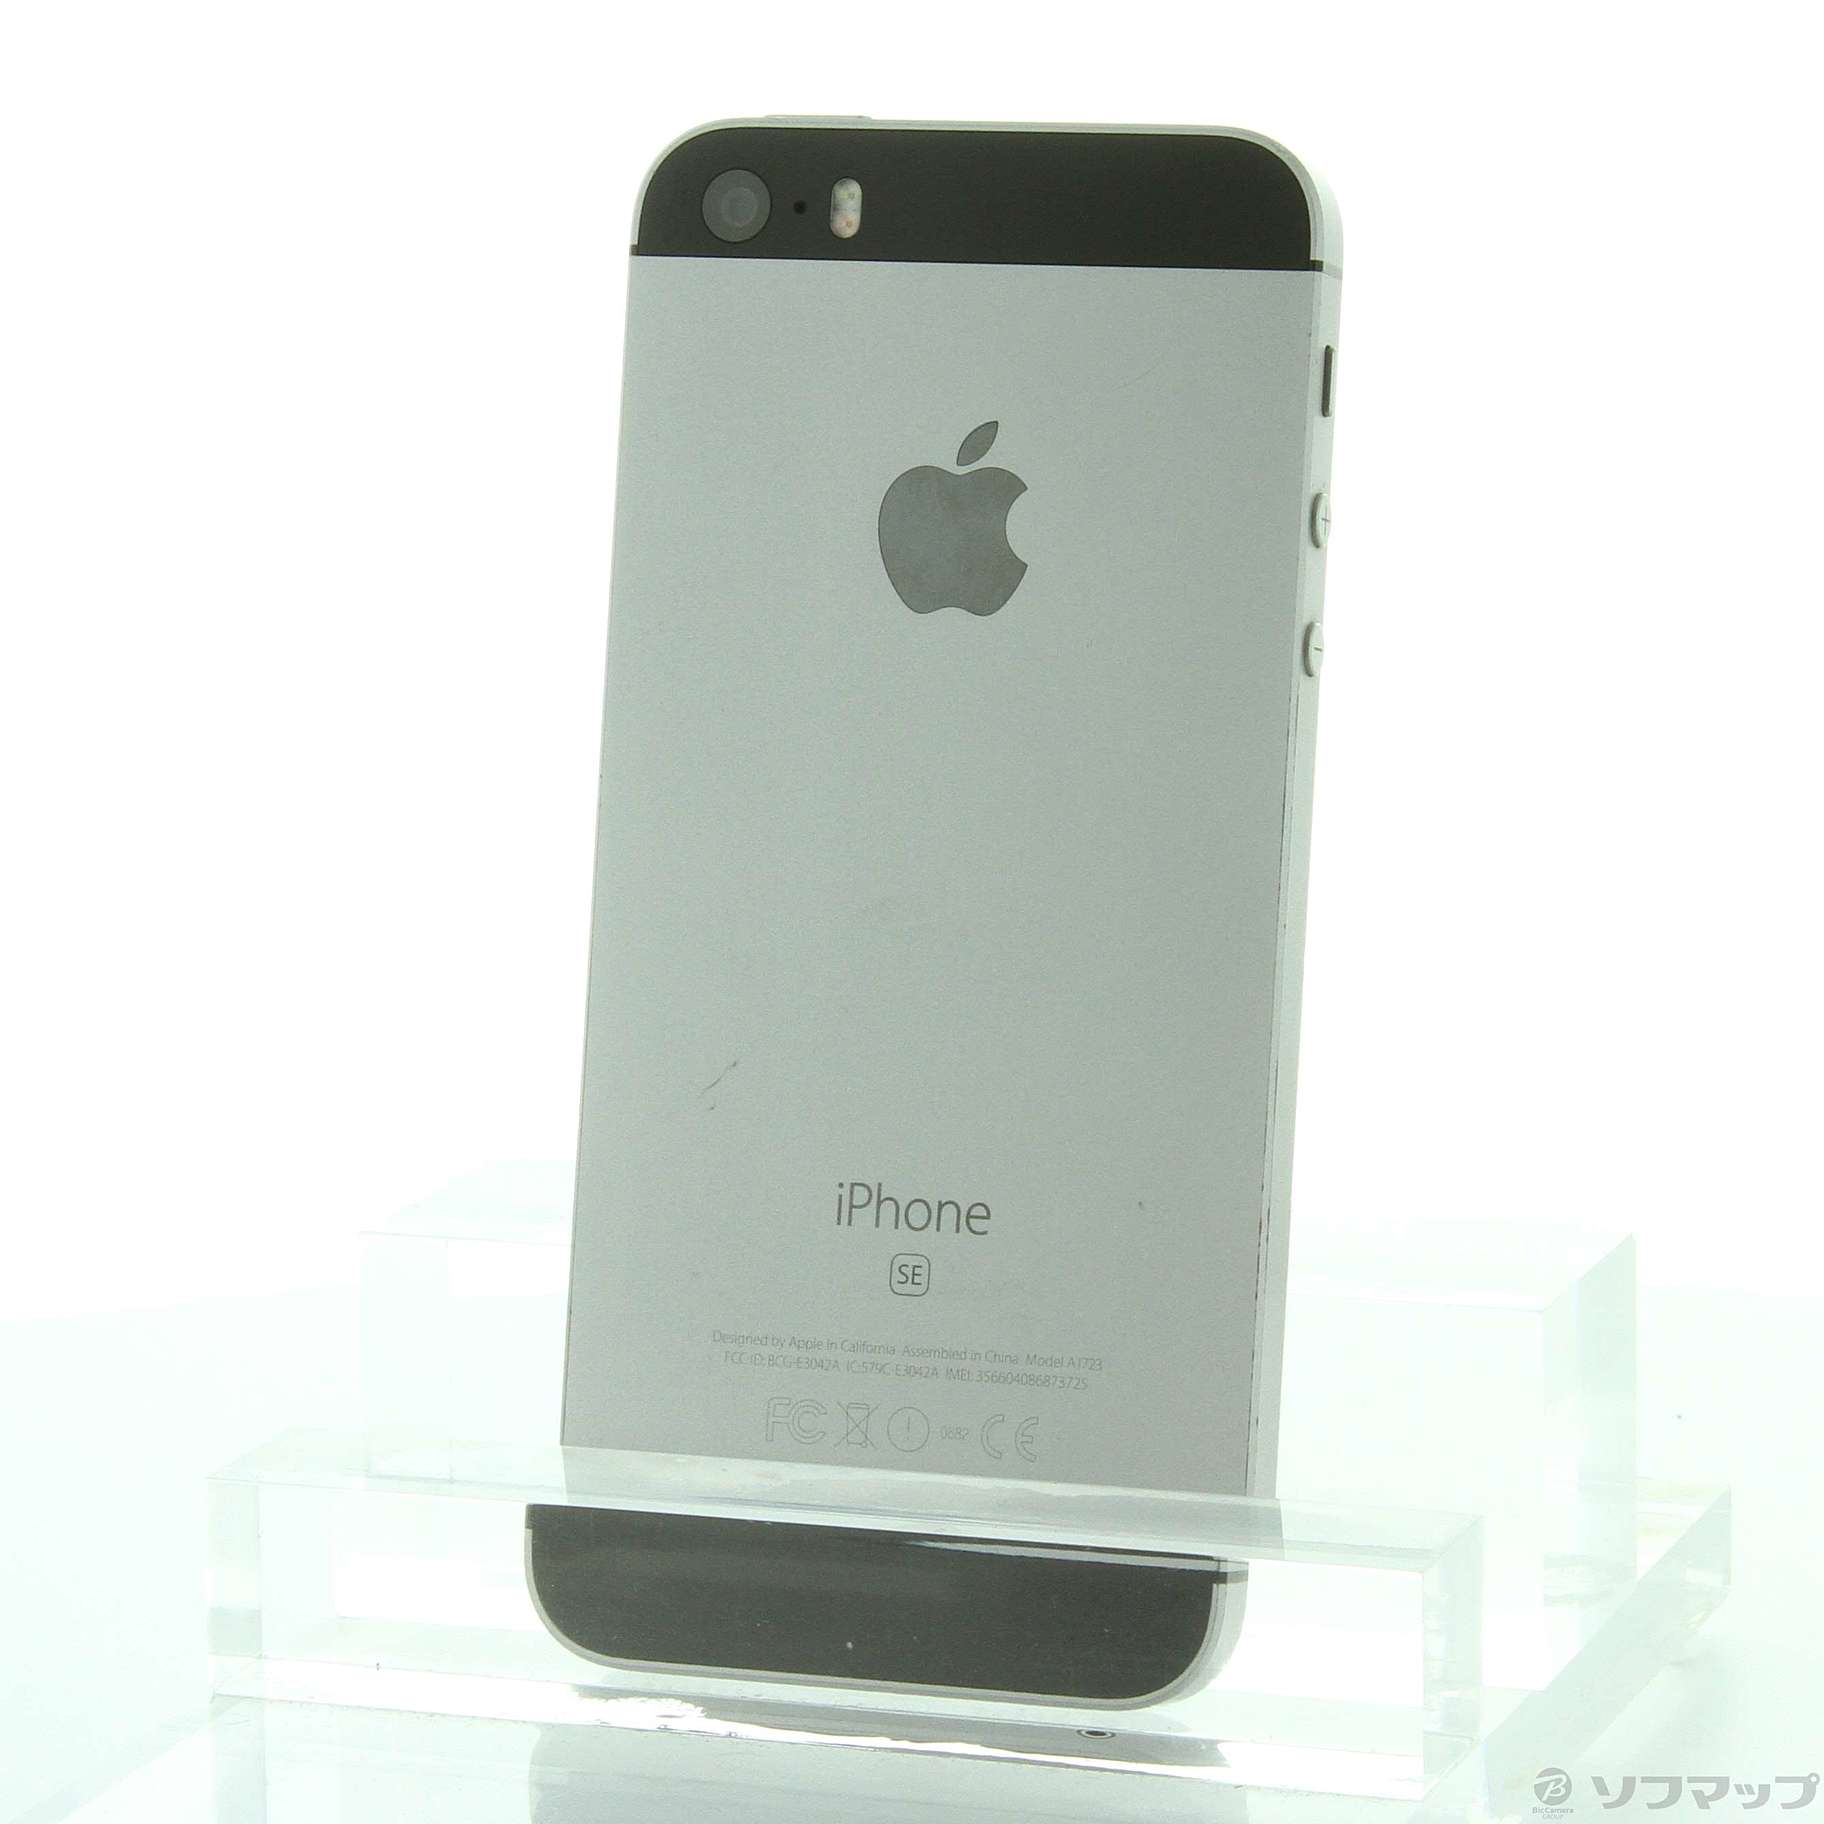 iPhone SE 初代 Space Gray. SIM フリー - 携帯電話本体